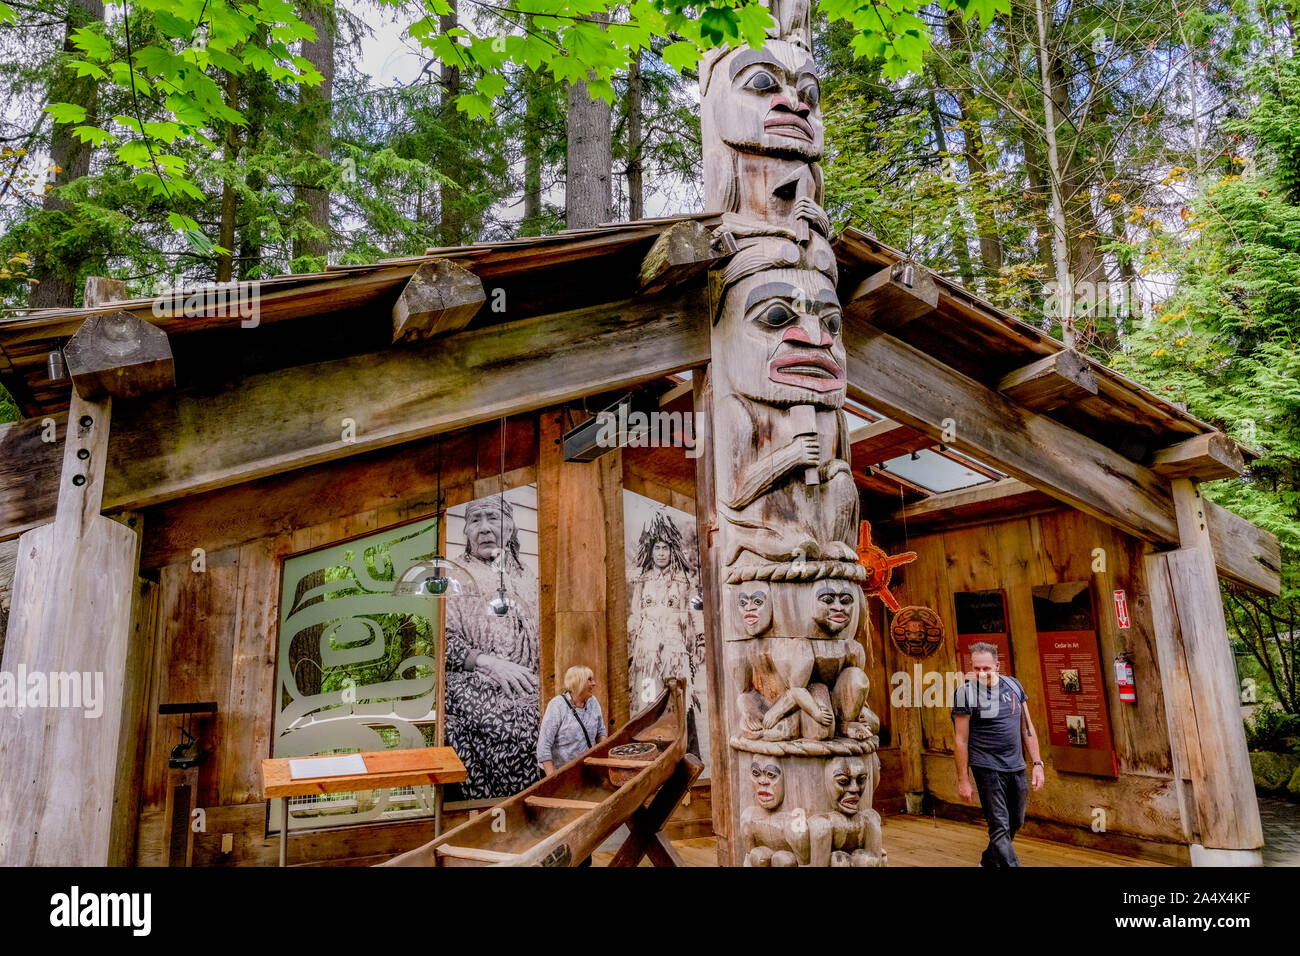 Indigenous, First Nations exhibit, Capilano Suspension Bridge Park, North Vancouver, British Columbia, Canada Stock Photo